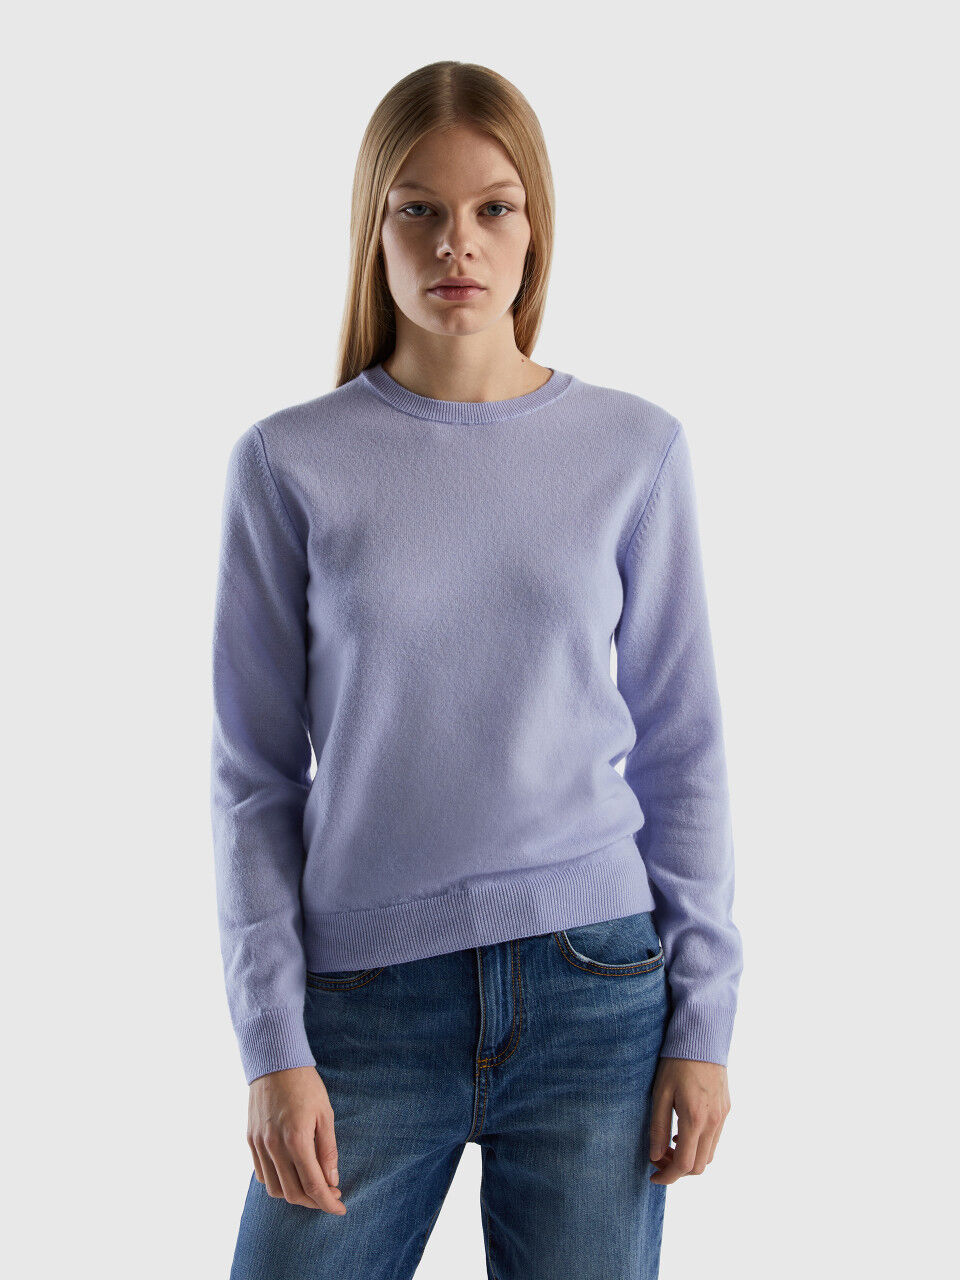 Lavender crew neck sweater in pure Merino wool